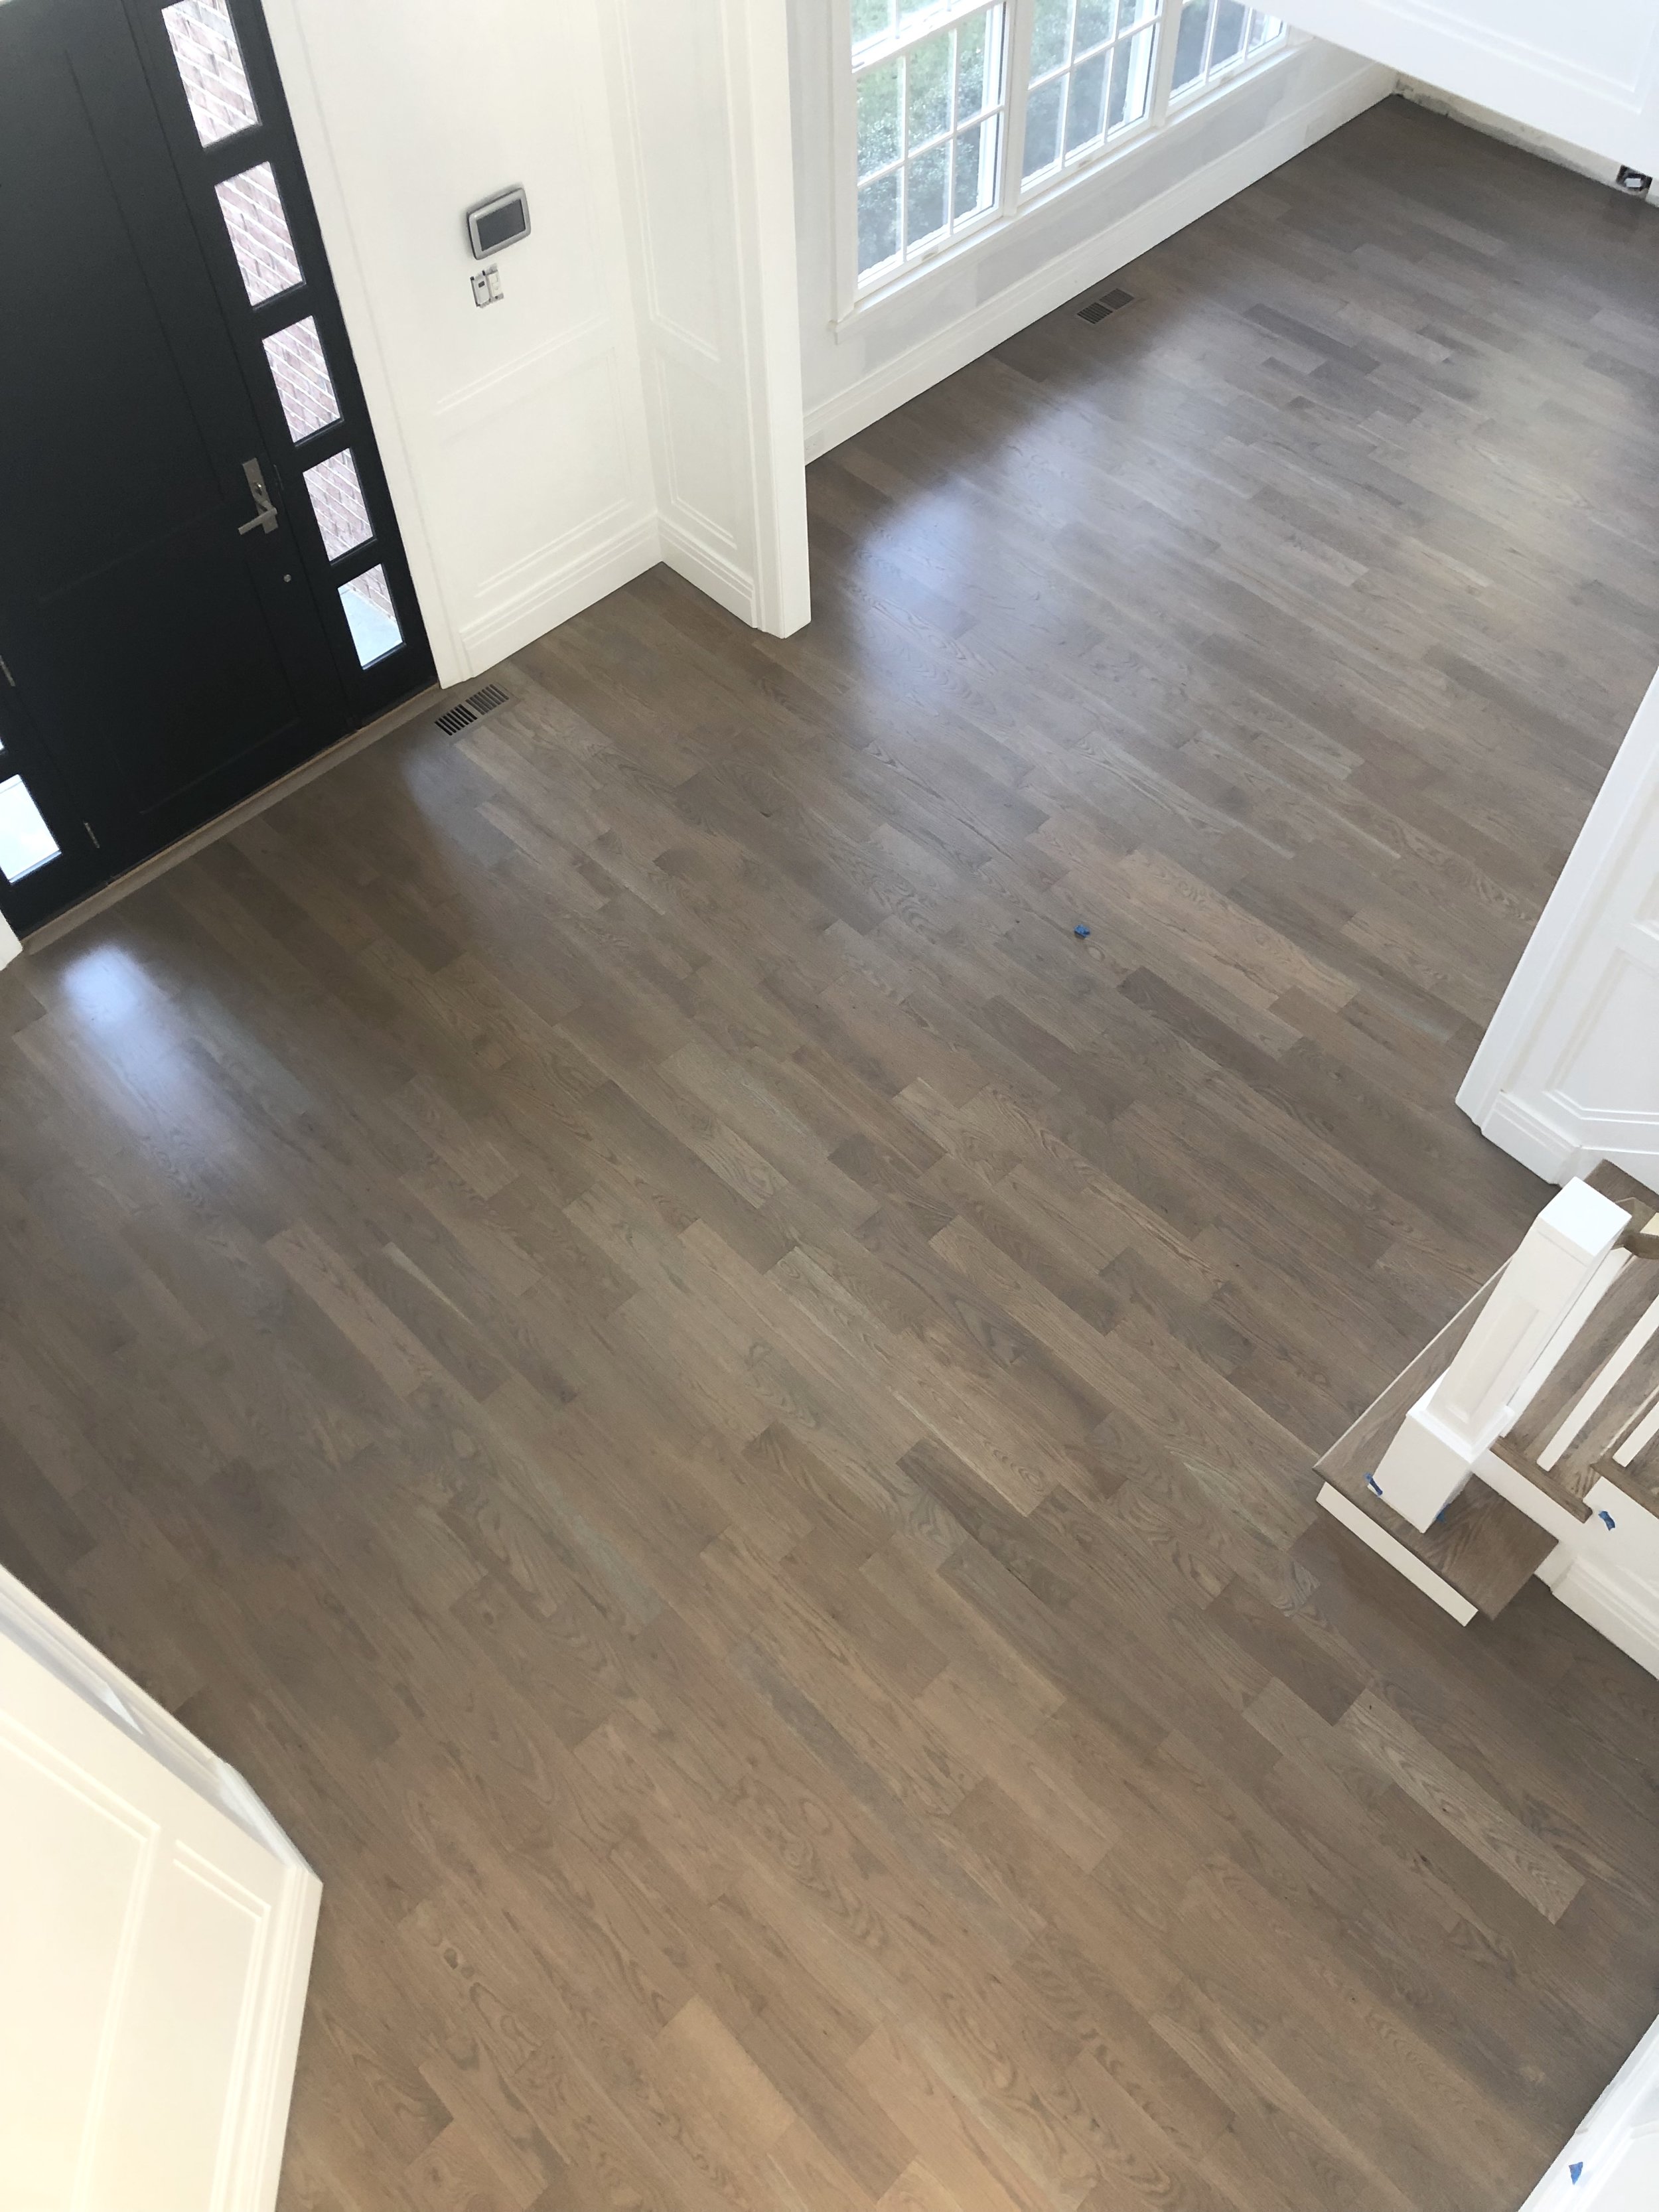 Gray Hardwood Floors, Are Grey Hardwood Floors Popular